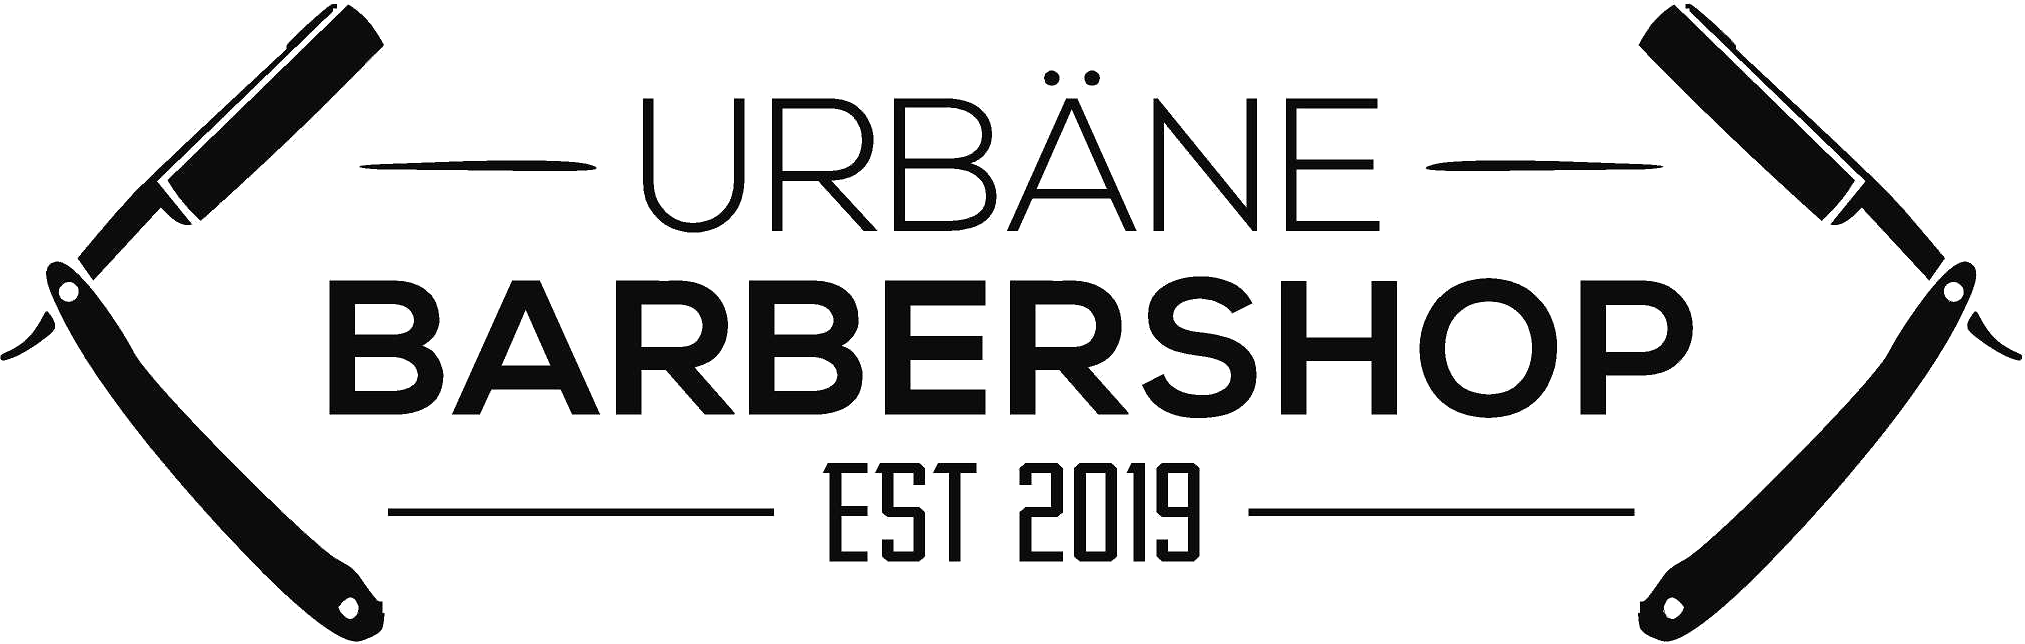 urbane barbershop logo